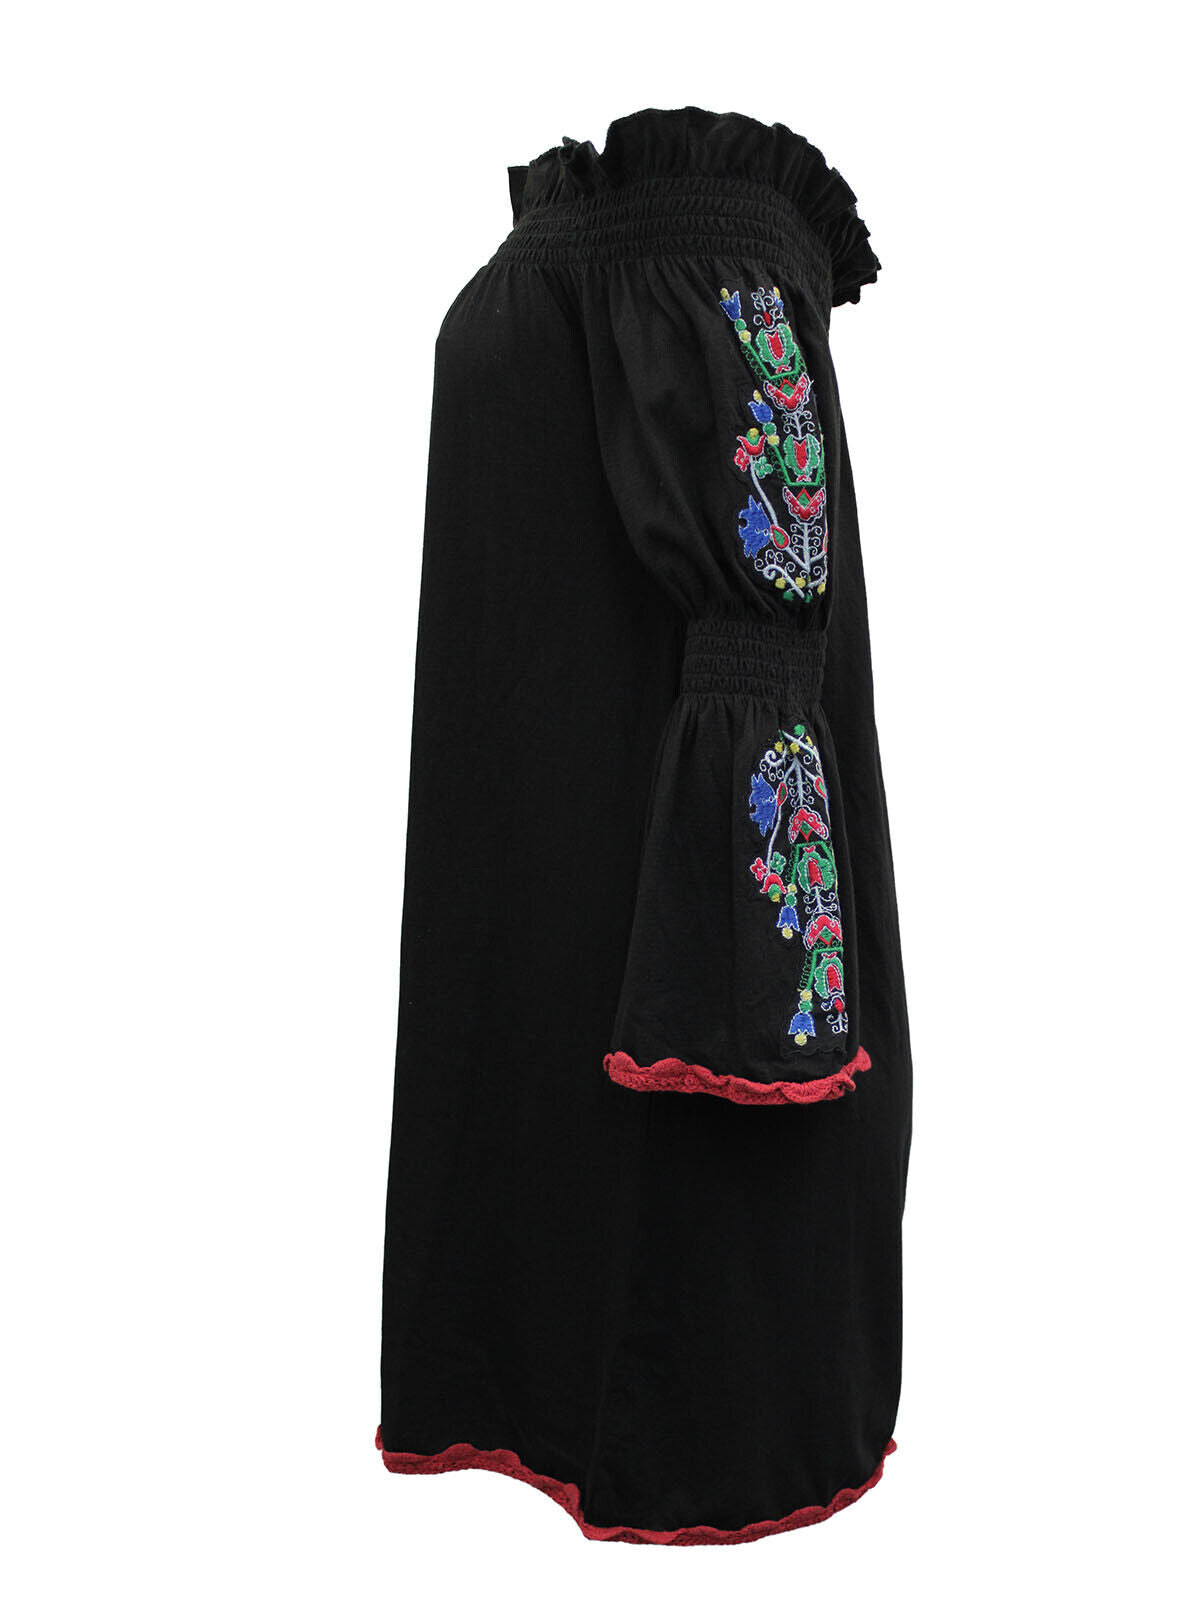 EX ASOS Black Cotton Rich Embroidered Sleeve Off Shoulder Dress 10, 12, 16, 18